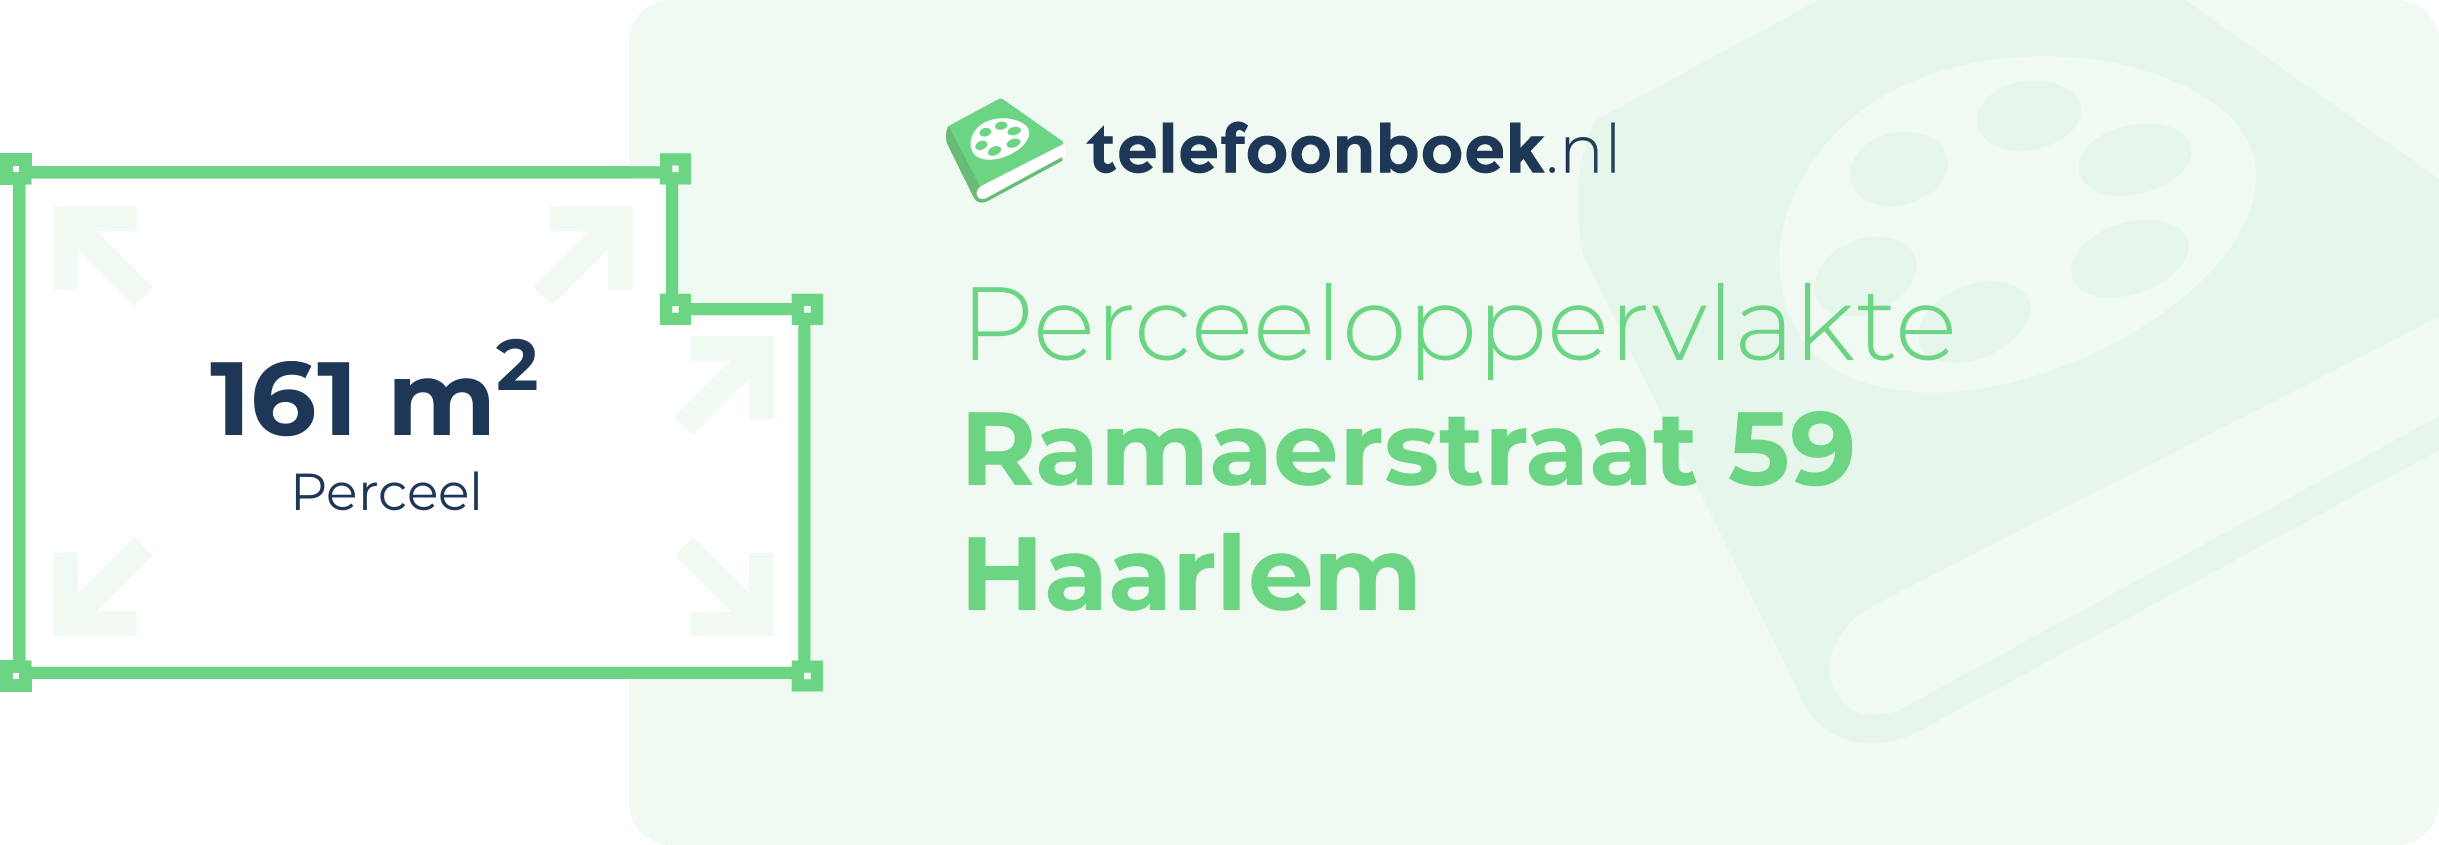 Perceeloppervlakte Ramaerstraat 59 Haarlem